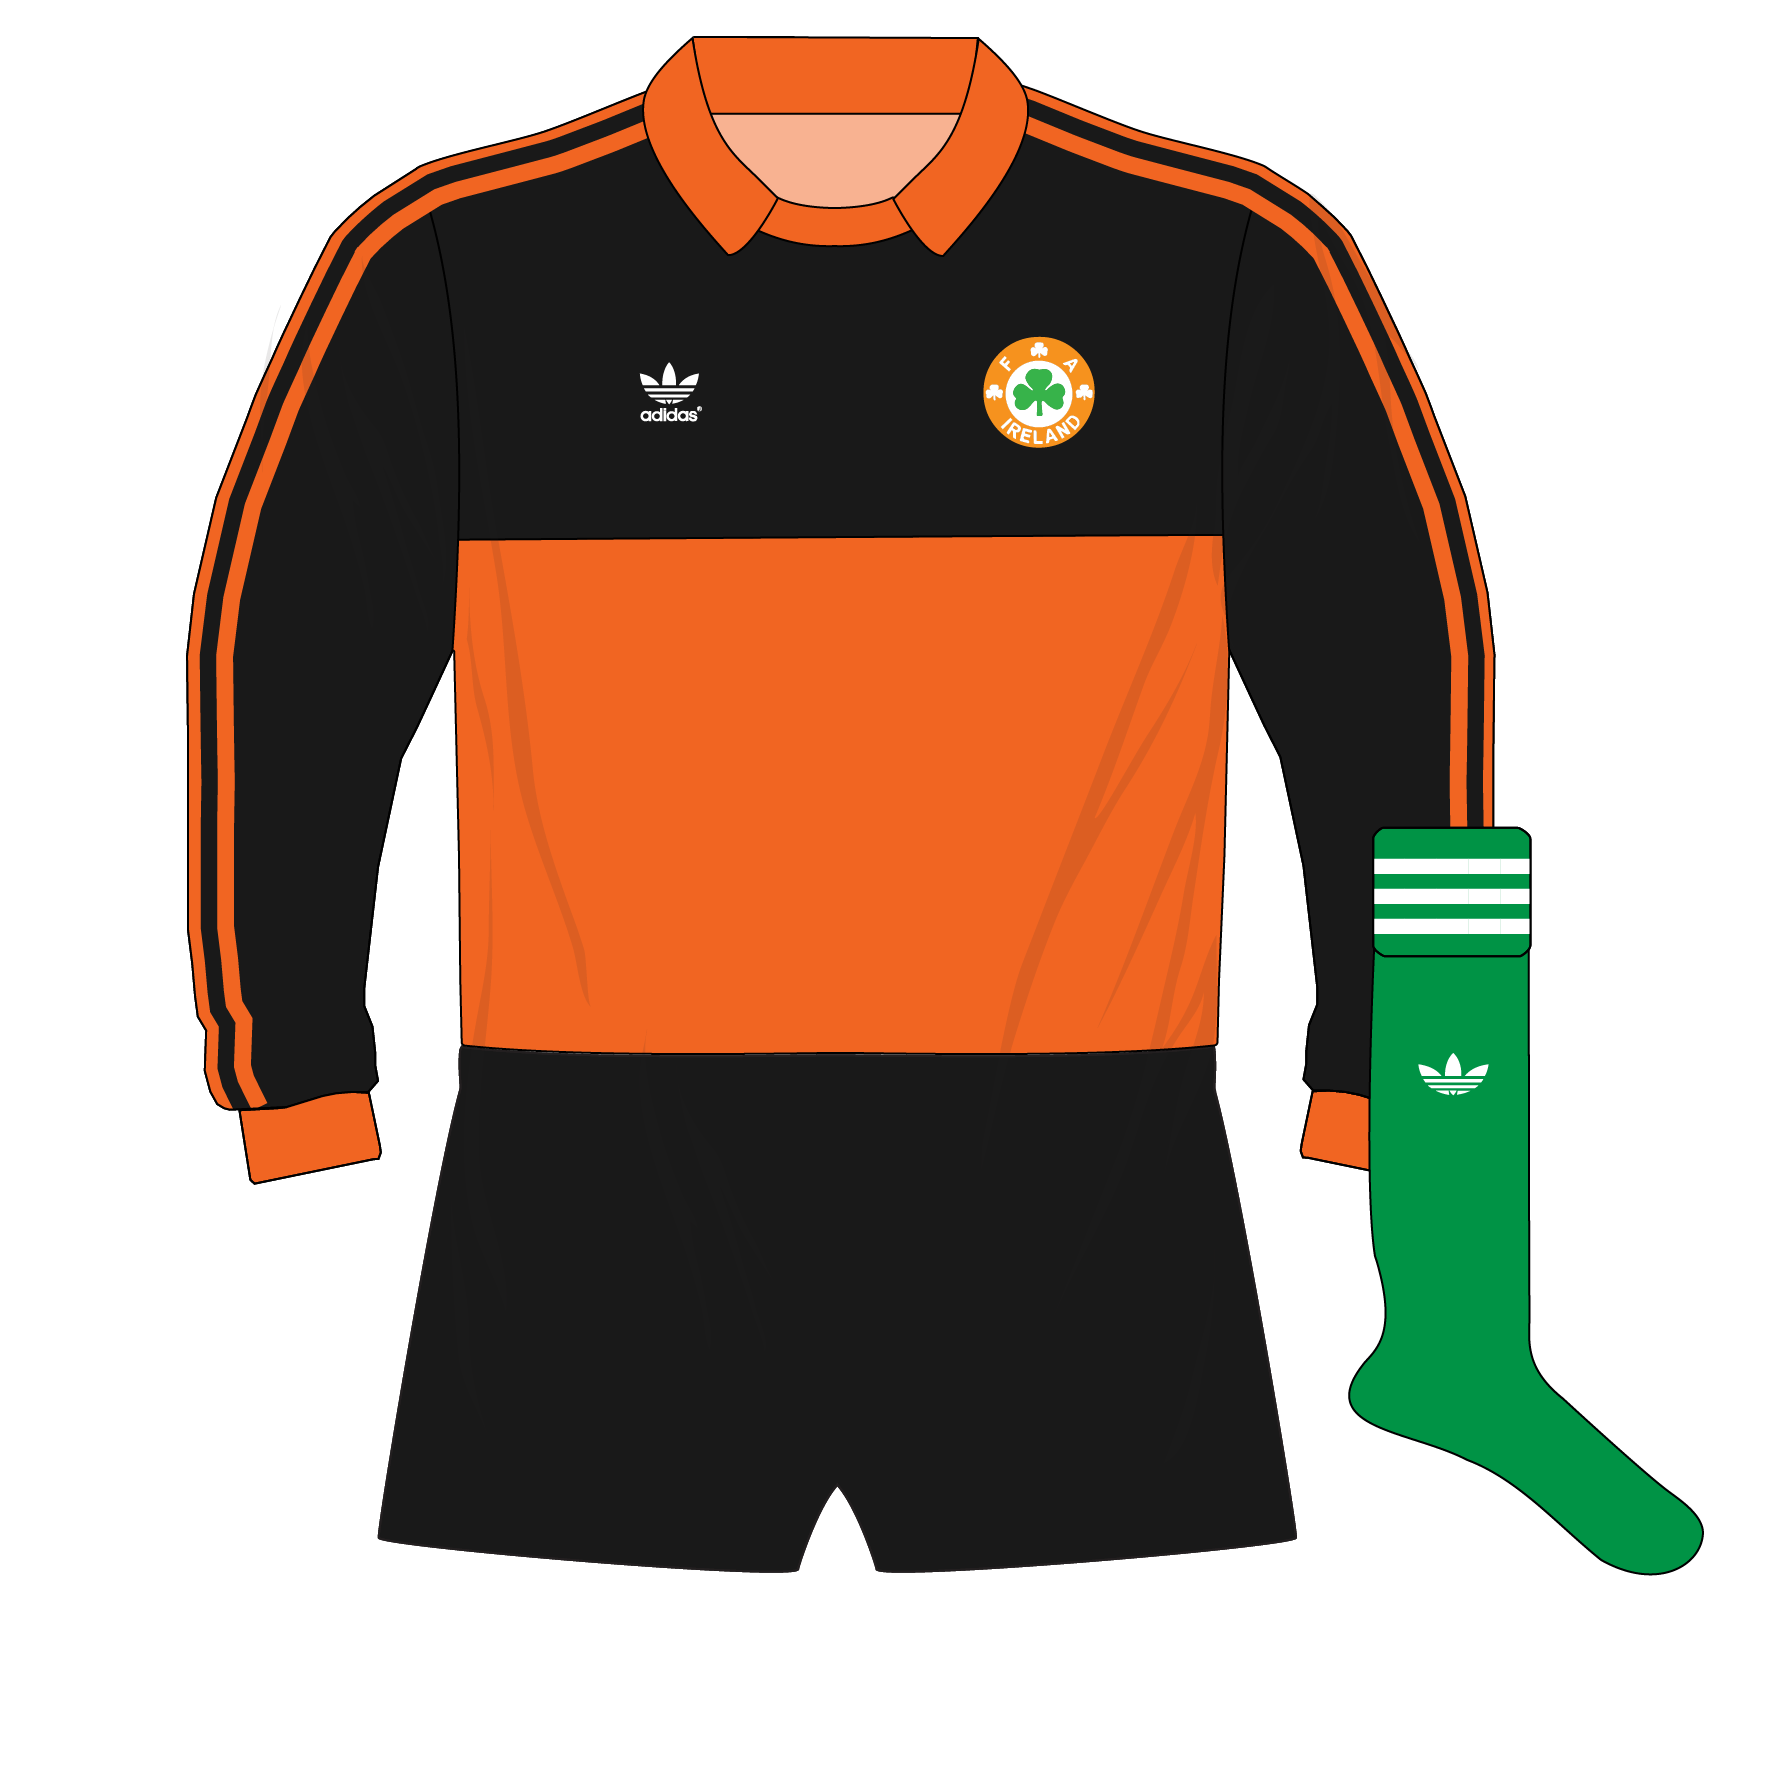 ireland goalkeeper jersey